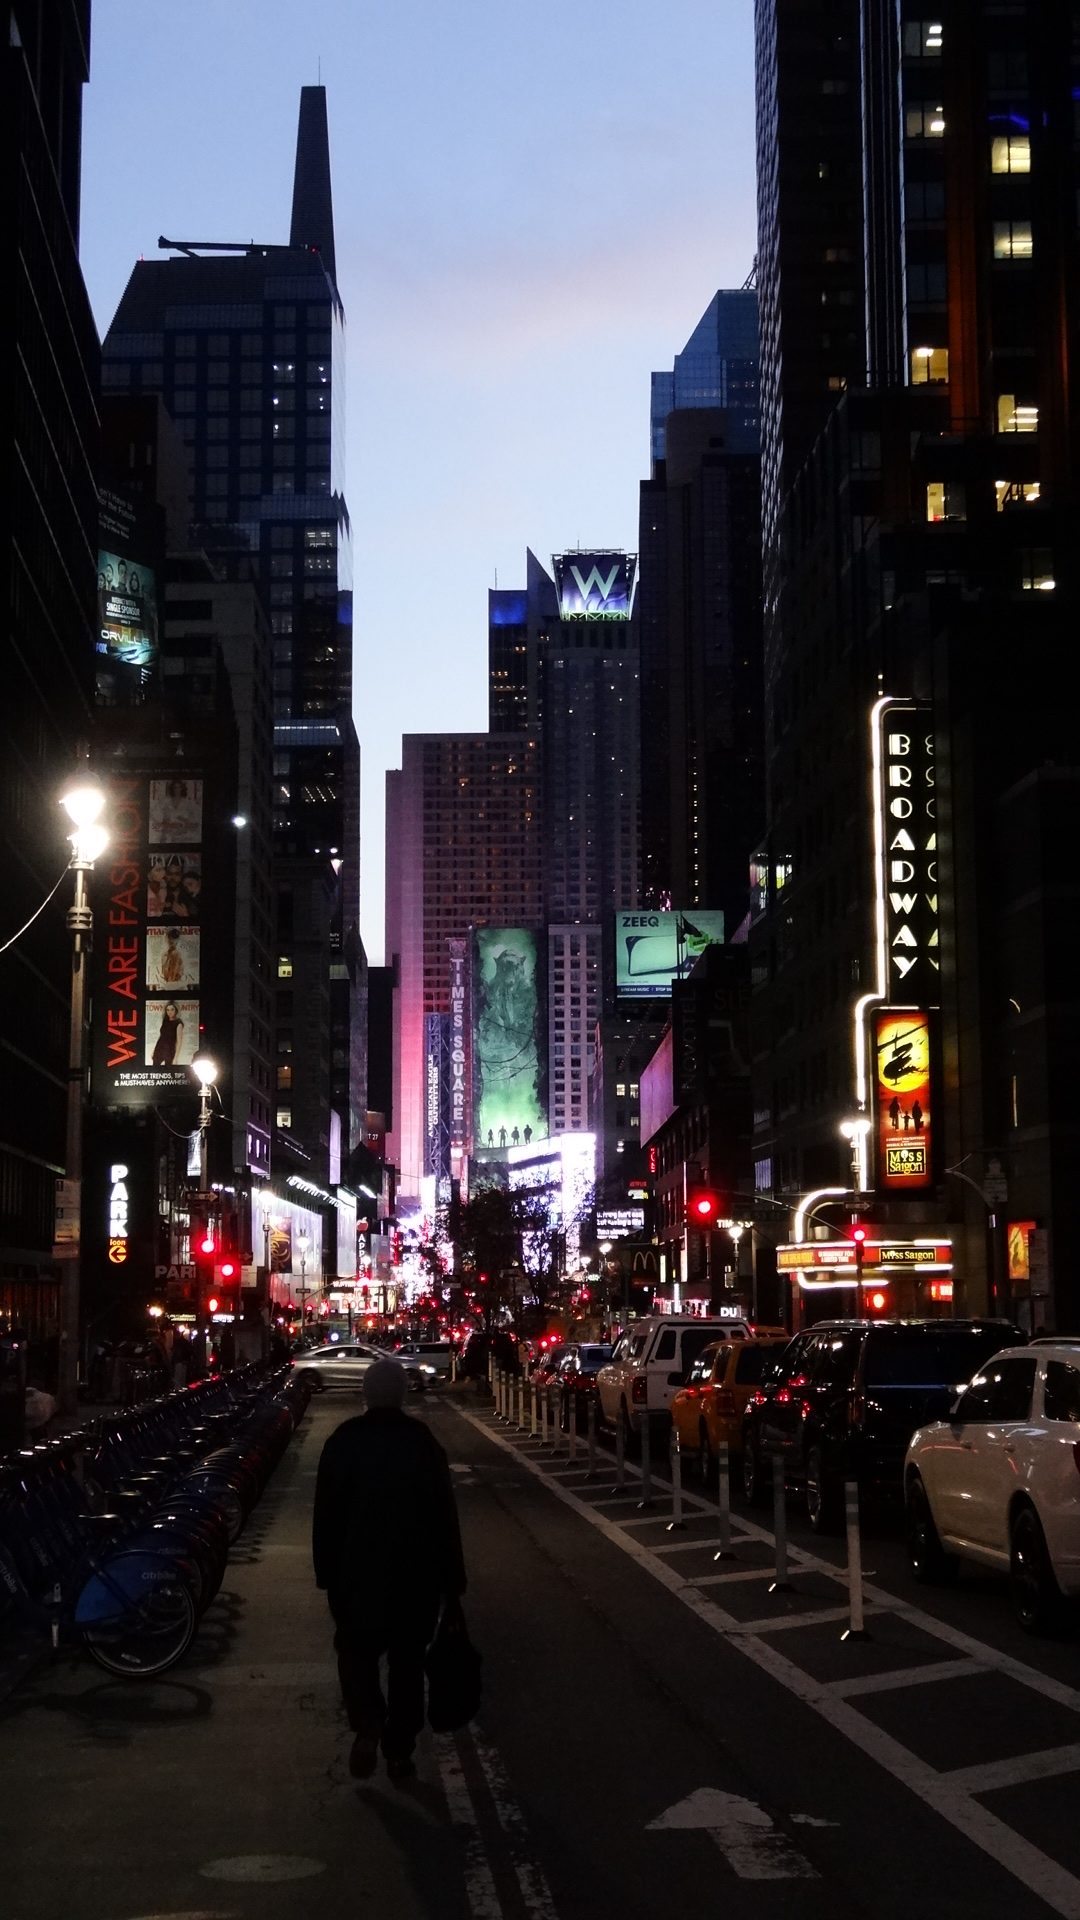 Broadway by night